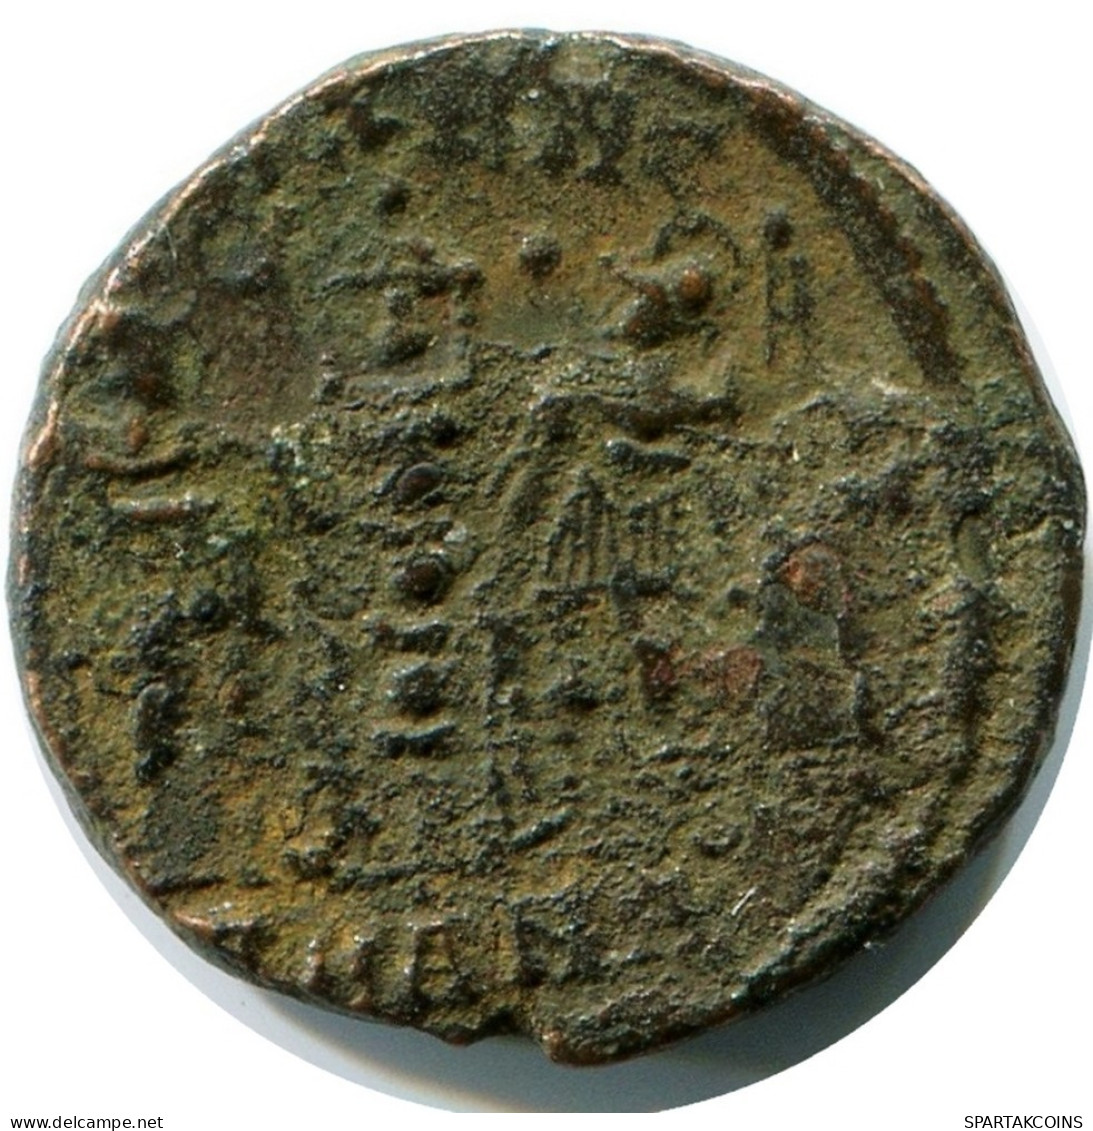 RÖMISCHE Münze MINTED IN ANTIOCH FOUND IN IHNASYAH HOARD EGYPT #ANC11308.14.D.A - L'Empire Chrétien (307 à 363)